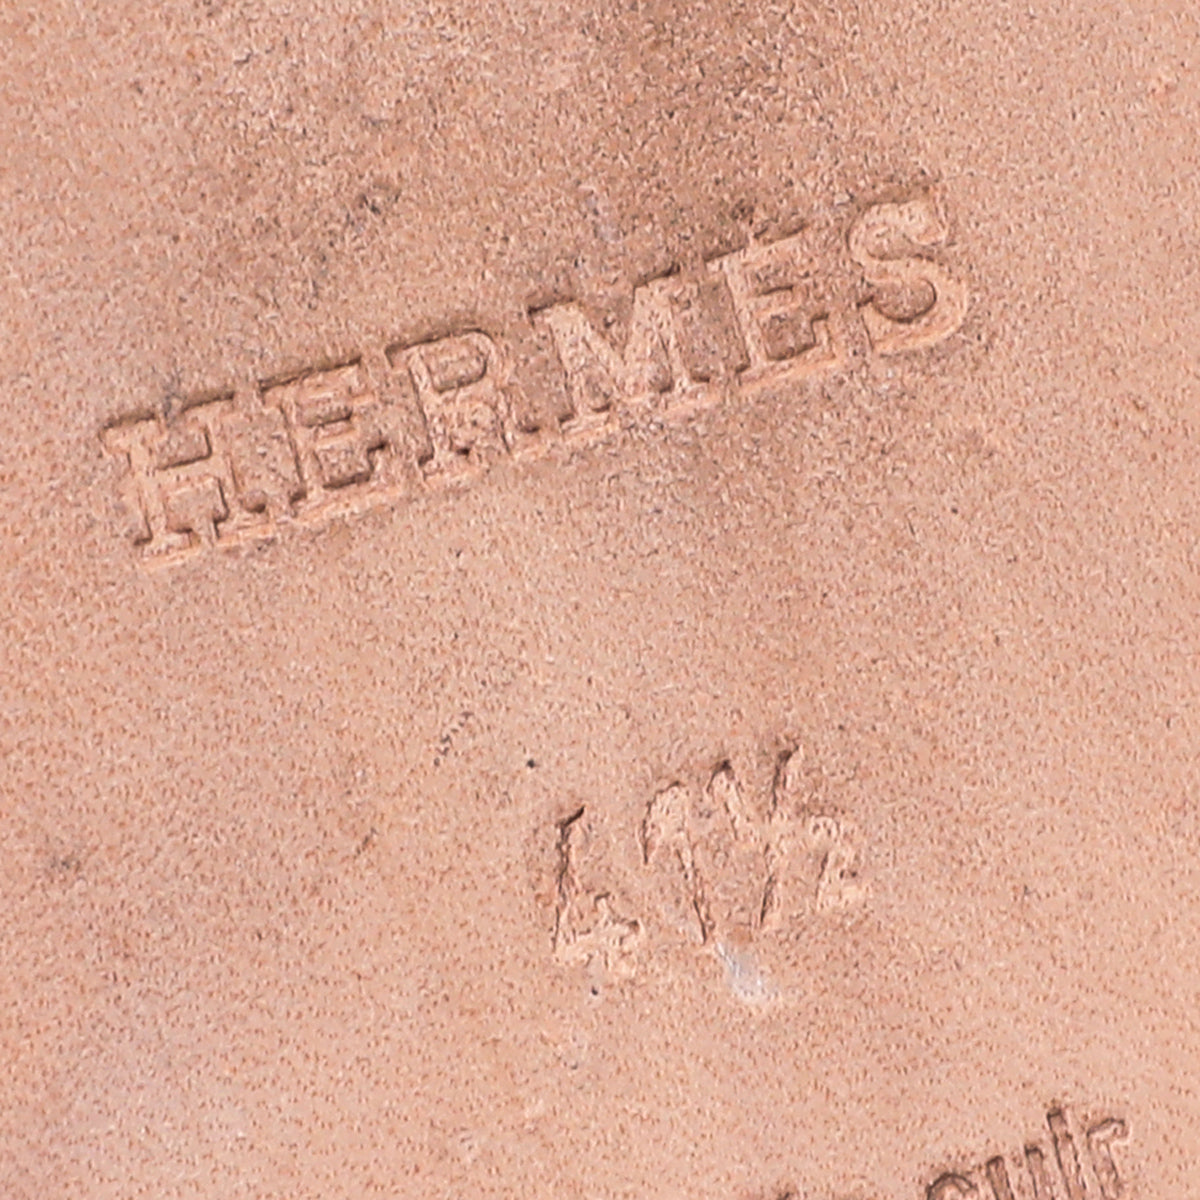 Hermes Gold Oran Box Flat Sandals 41.5